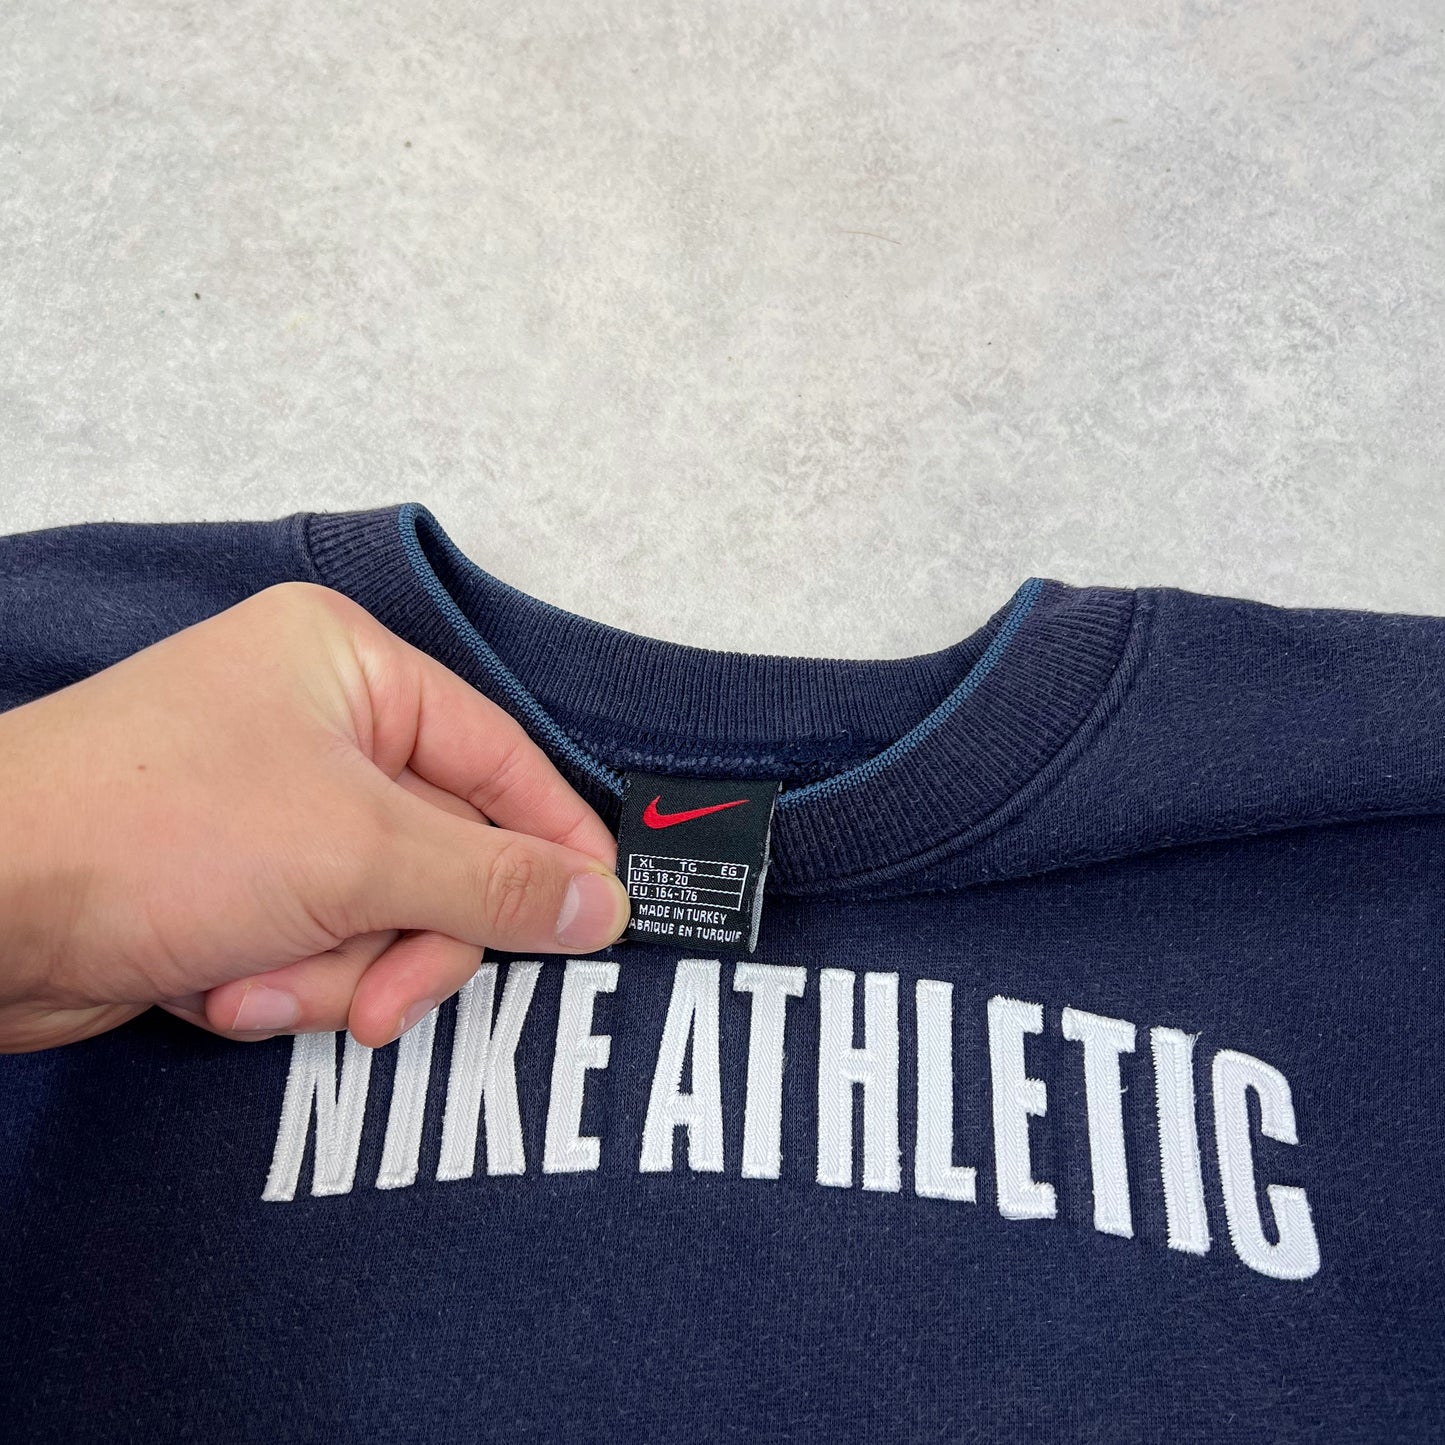 Nike Athletic RARE 1990s Sweatshirt (S)